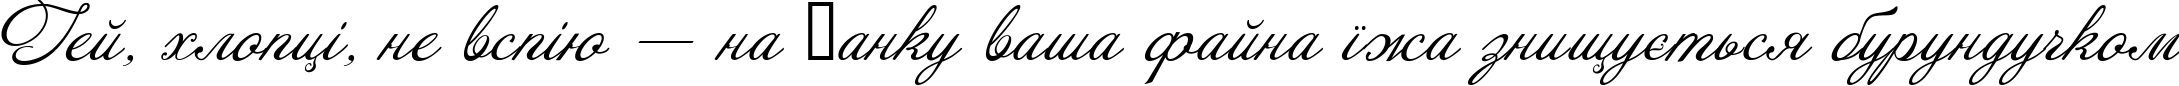 Пример написания шрифтом AnnabelleJF текста на украинском